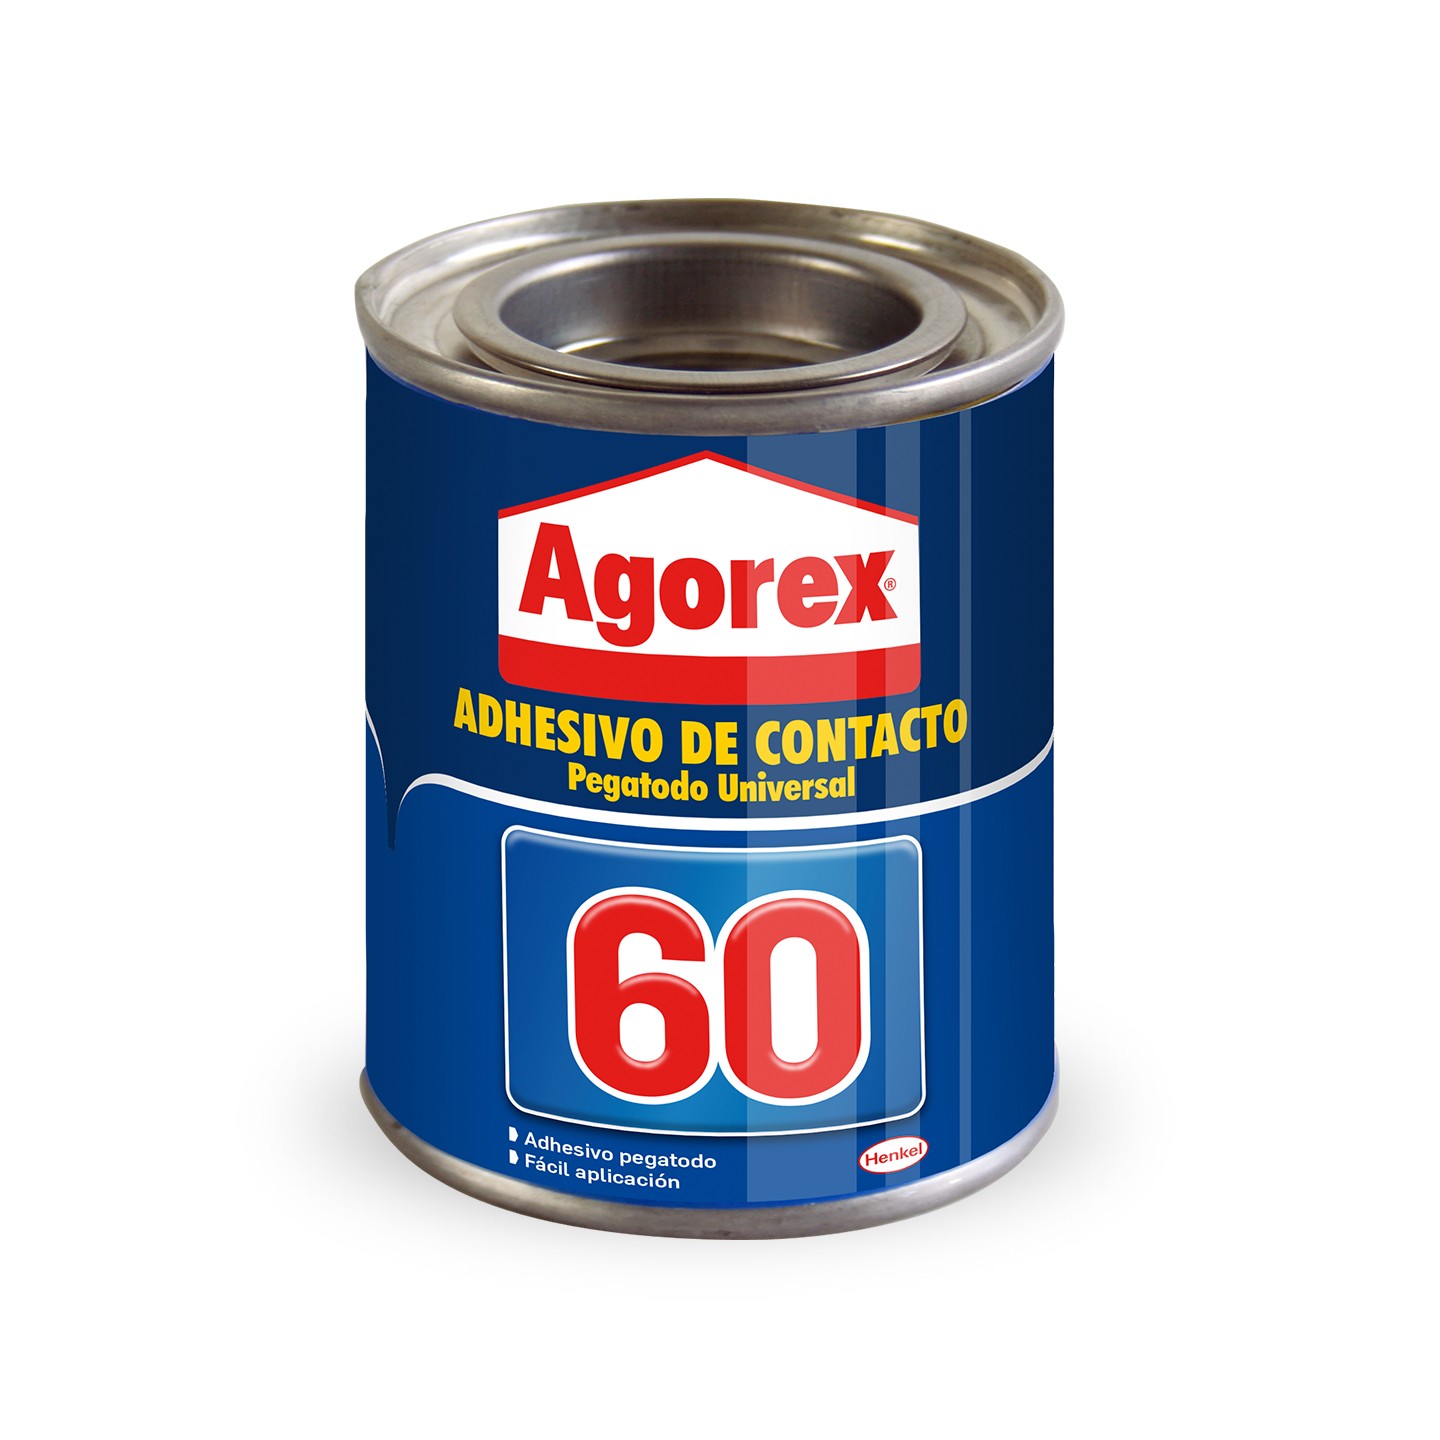 Adhesivos de Montaje - Agorex